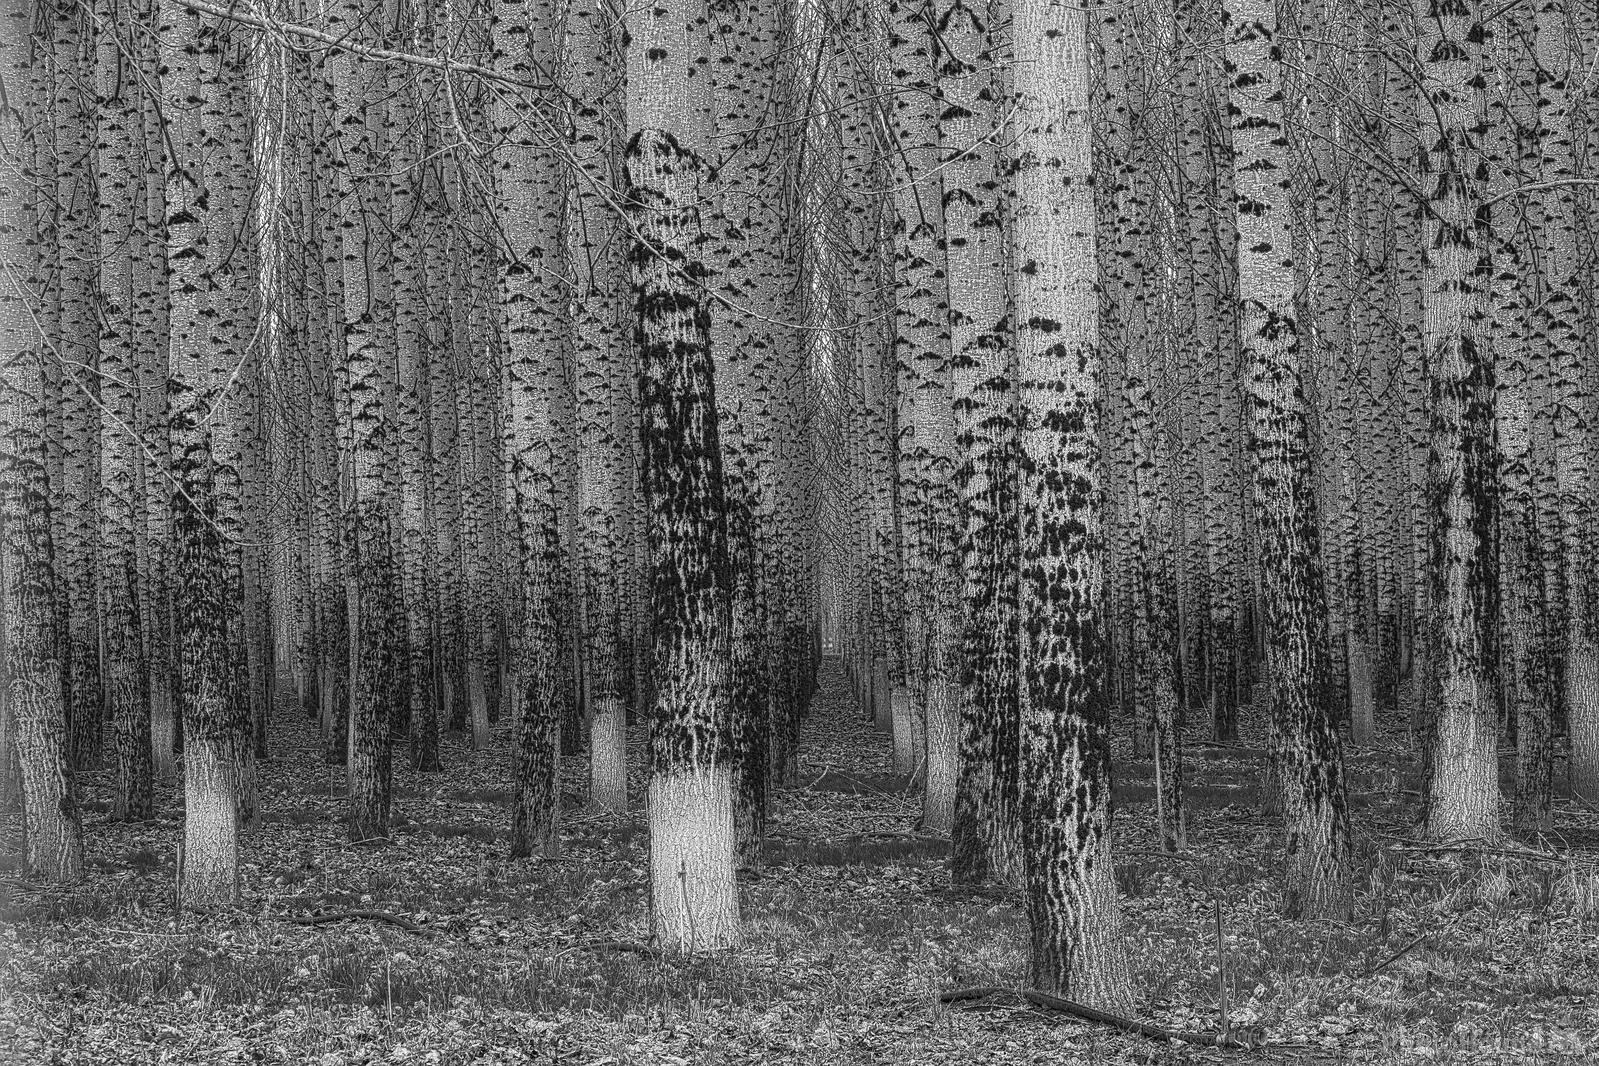 Image of Chehalis Poplar Plantation by Steve West